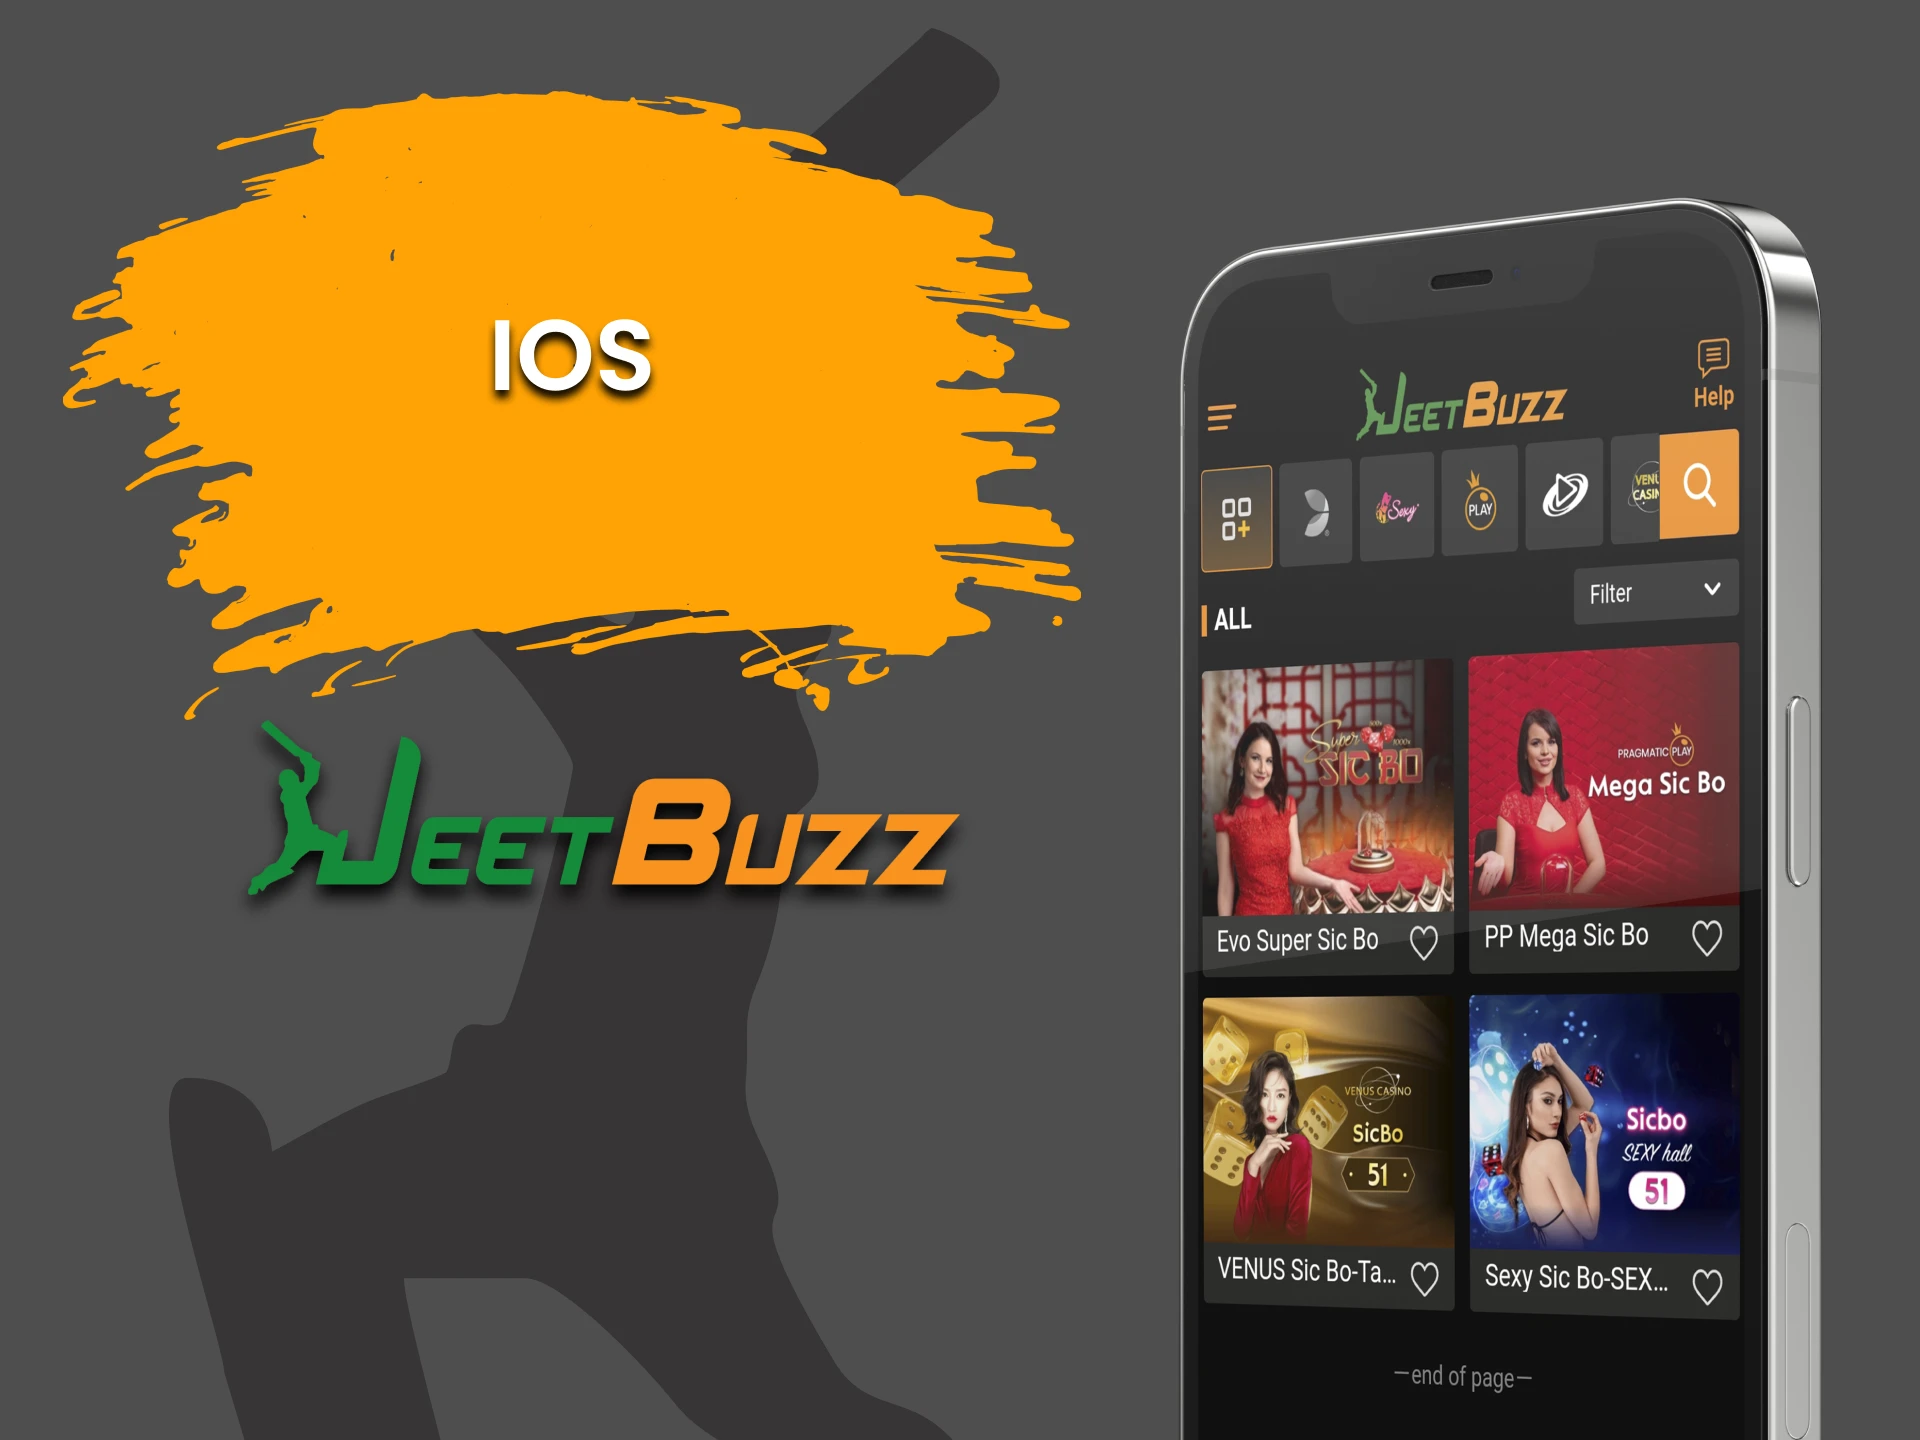 Play Sic Bo via Jeetbuzz app on iOS.